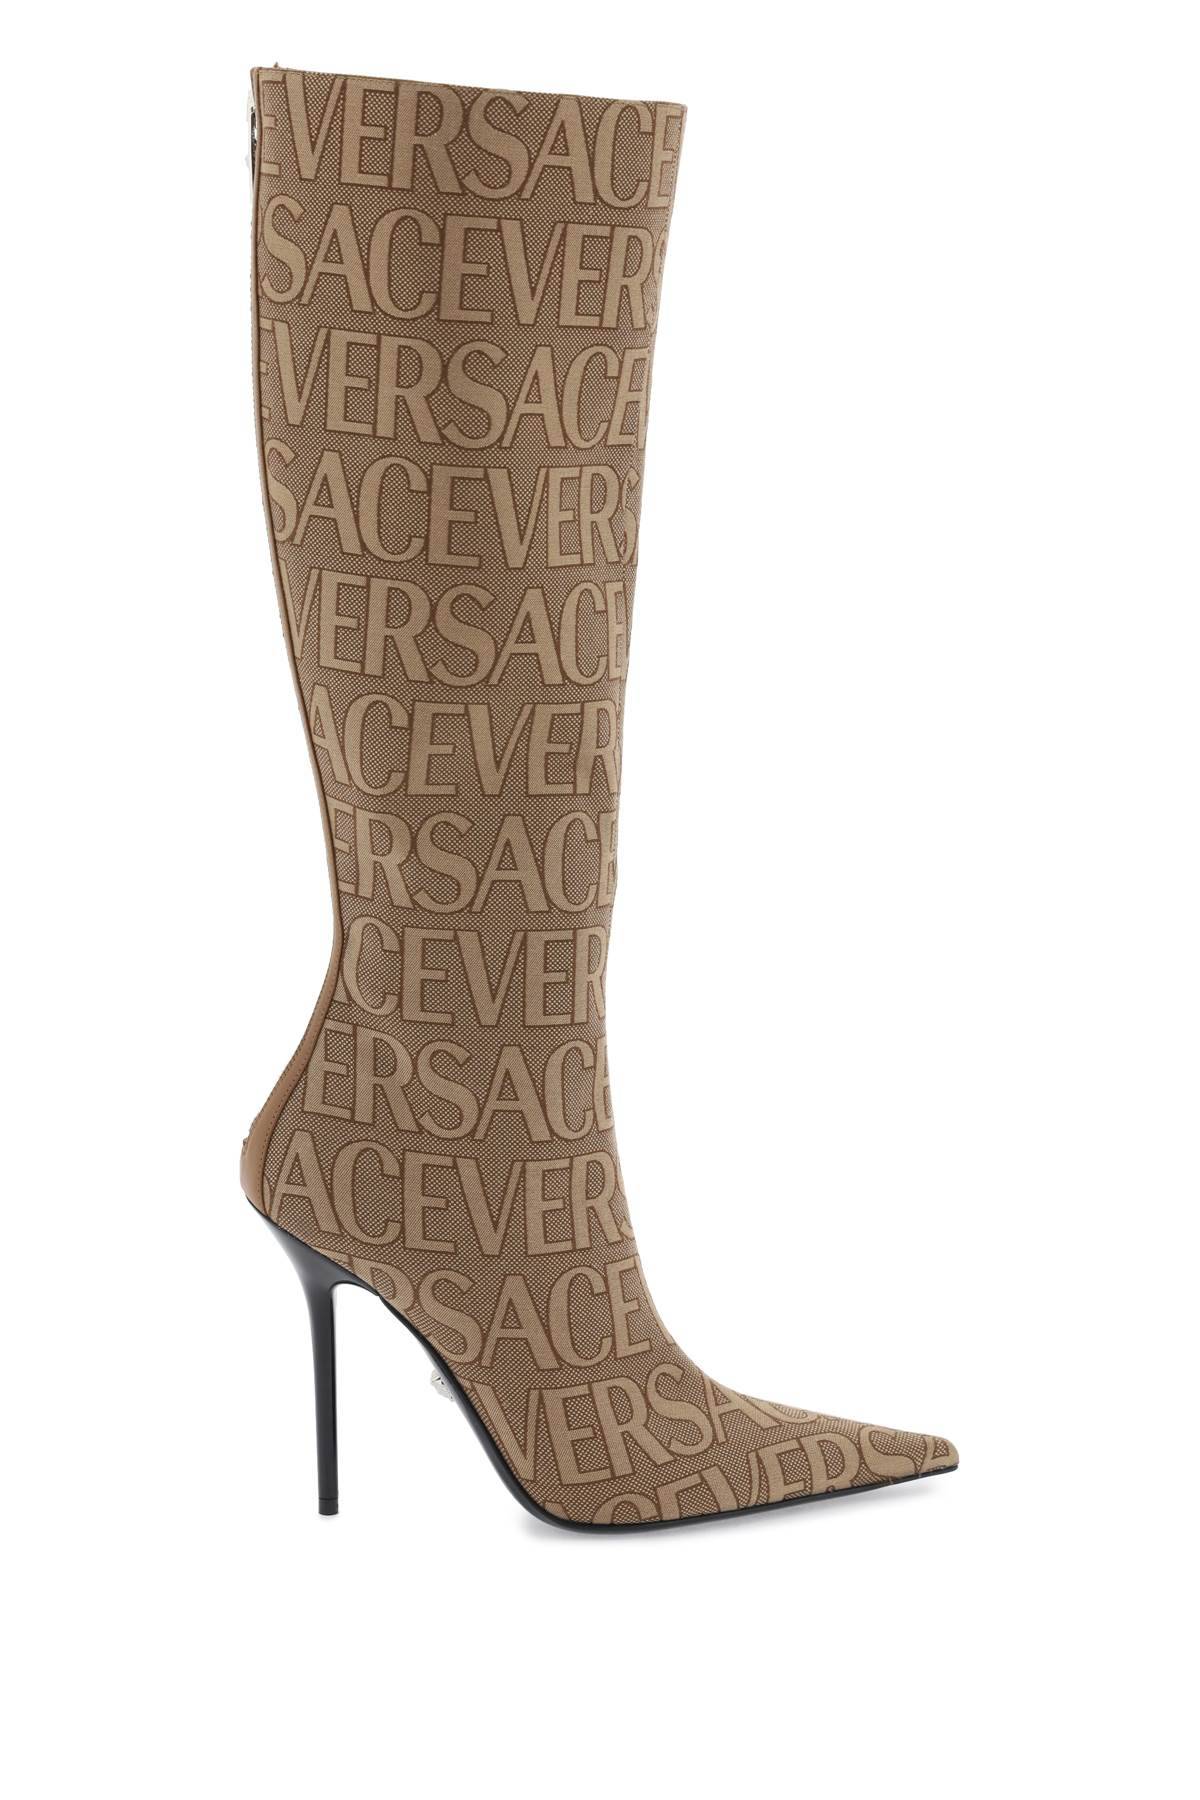 Versace VERSACE 'versace allover' boots